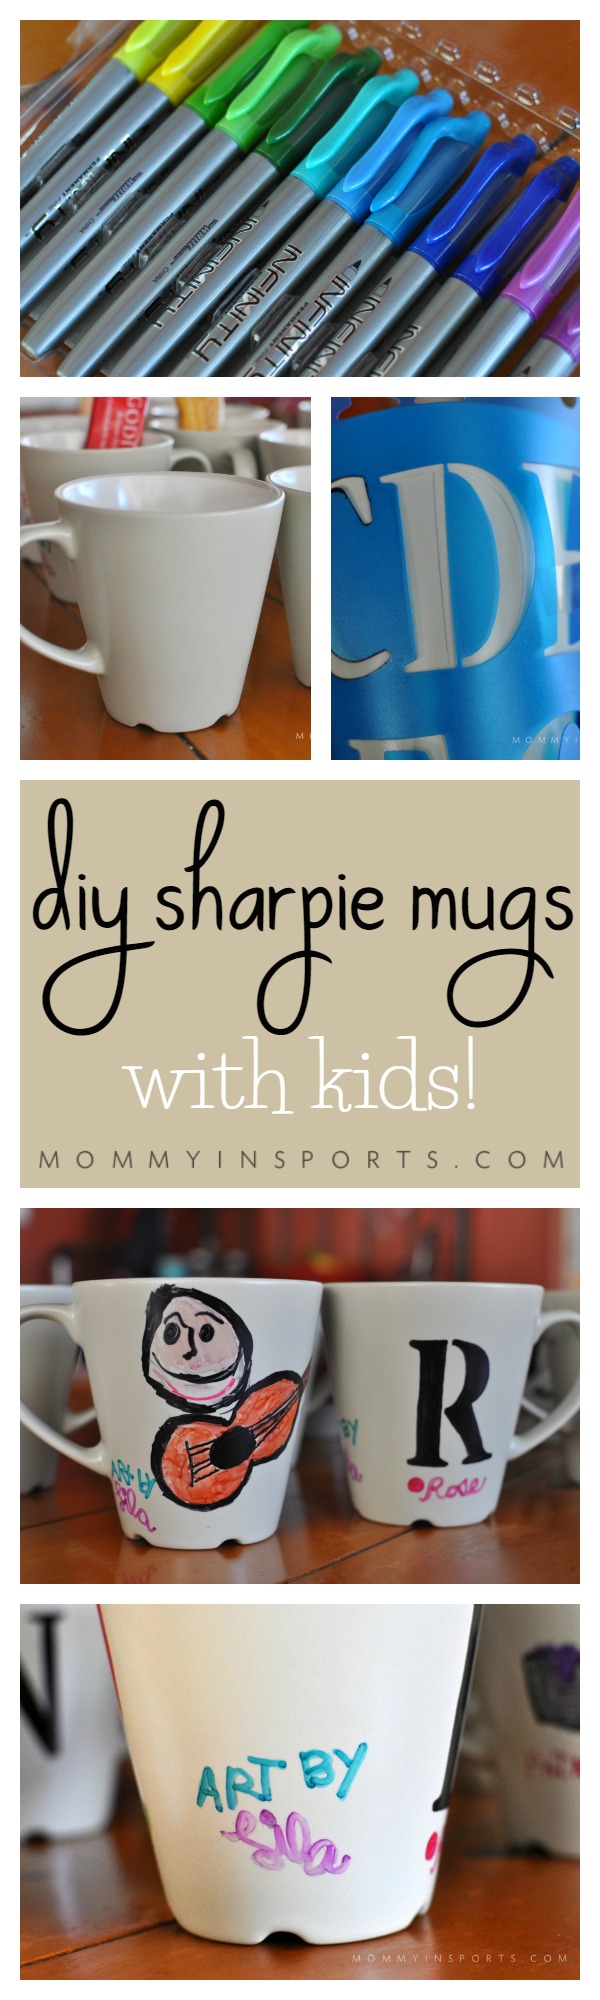 diy sharpie mugs with kids